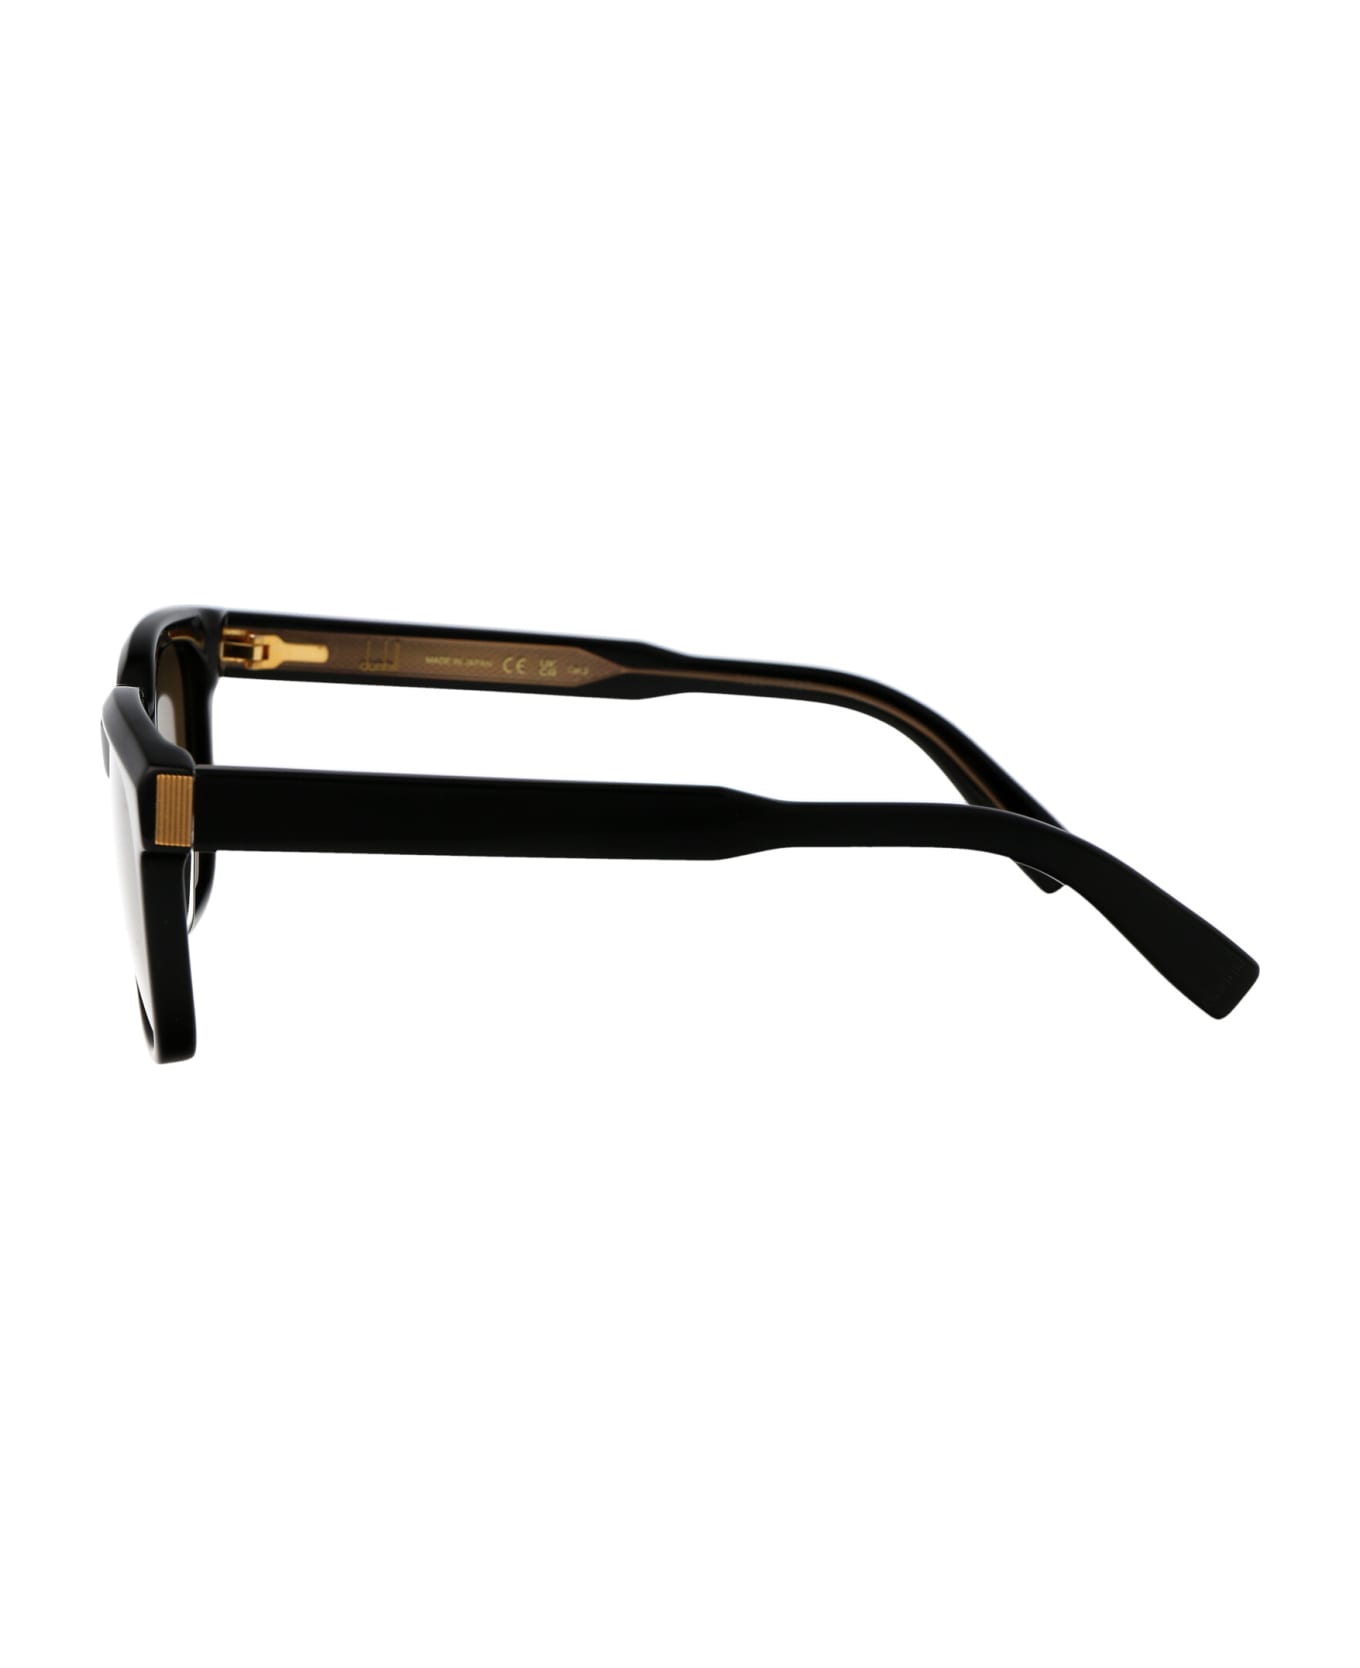 Dunhill Du0002s Sunglasses - 001 BLACK BLACK BROWN サングラス